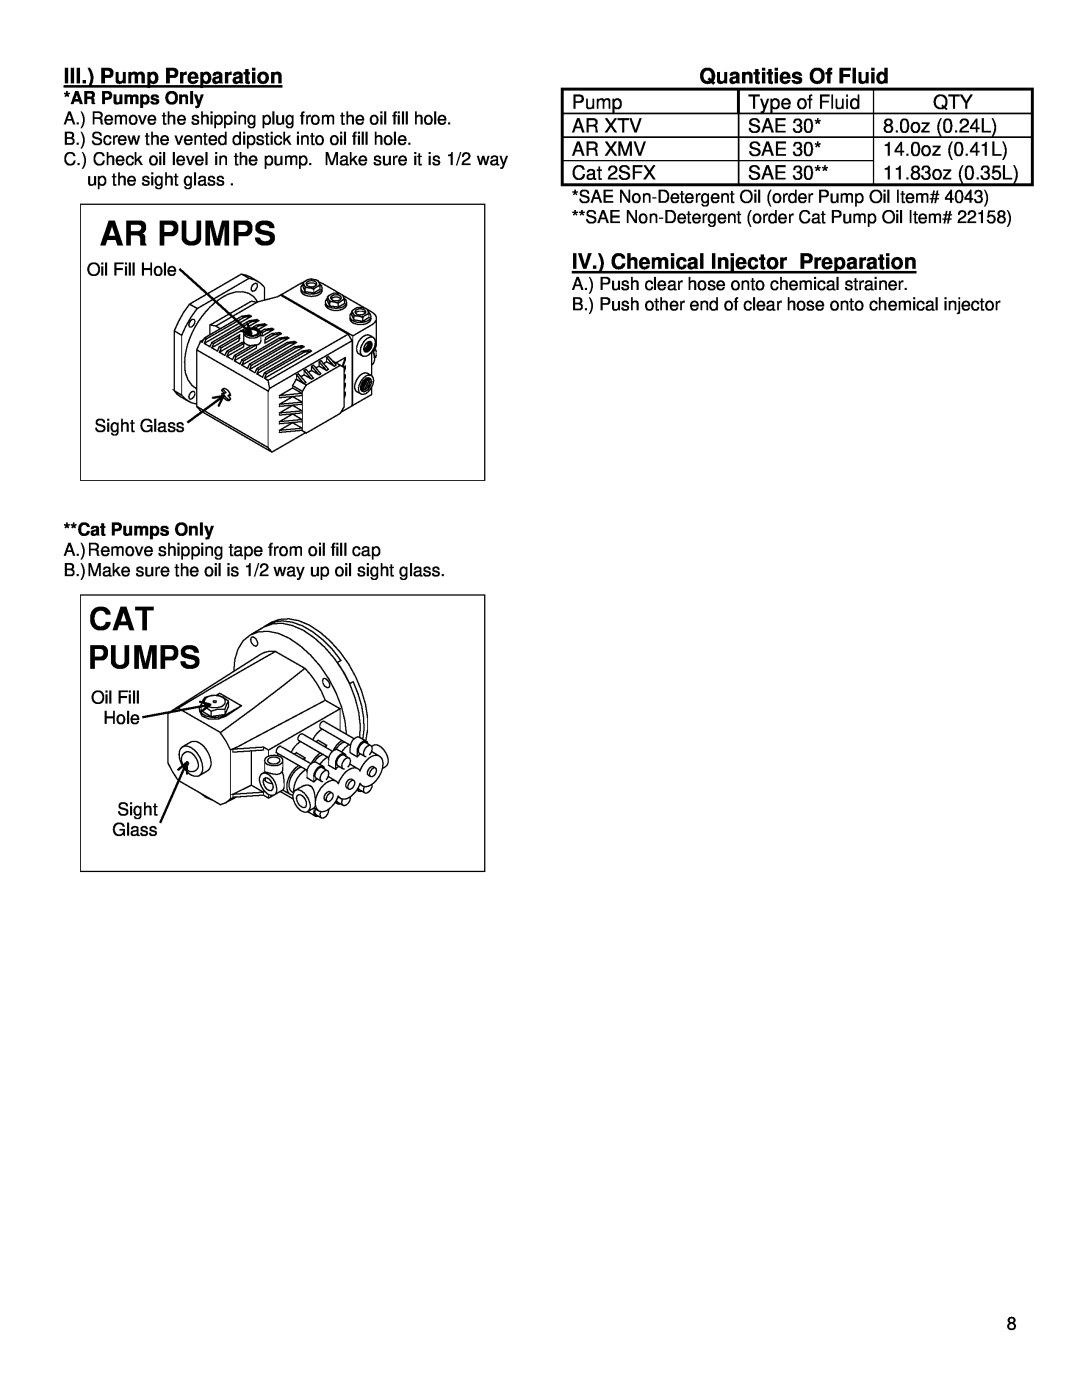 North Star MHOTPWR III. Pump Preparation, Quantities Of Fluid, IV. Chemical Injector Preparation, Ar Pumps, Cat Pumps 